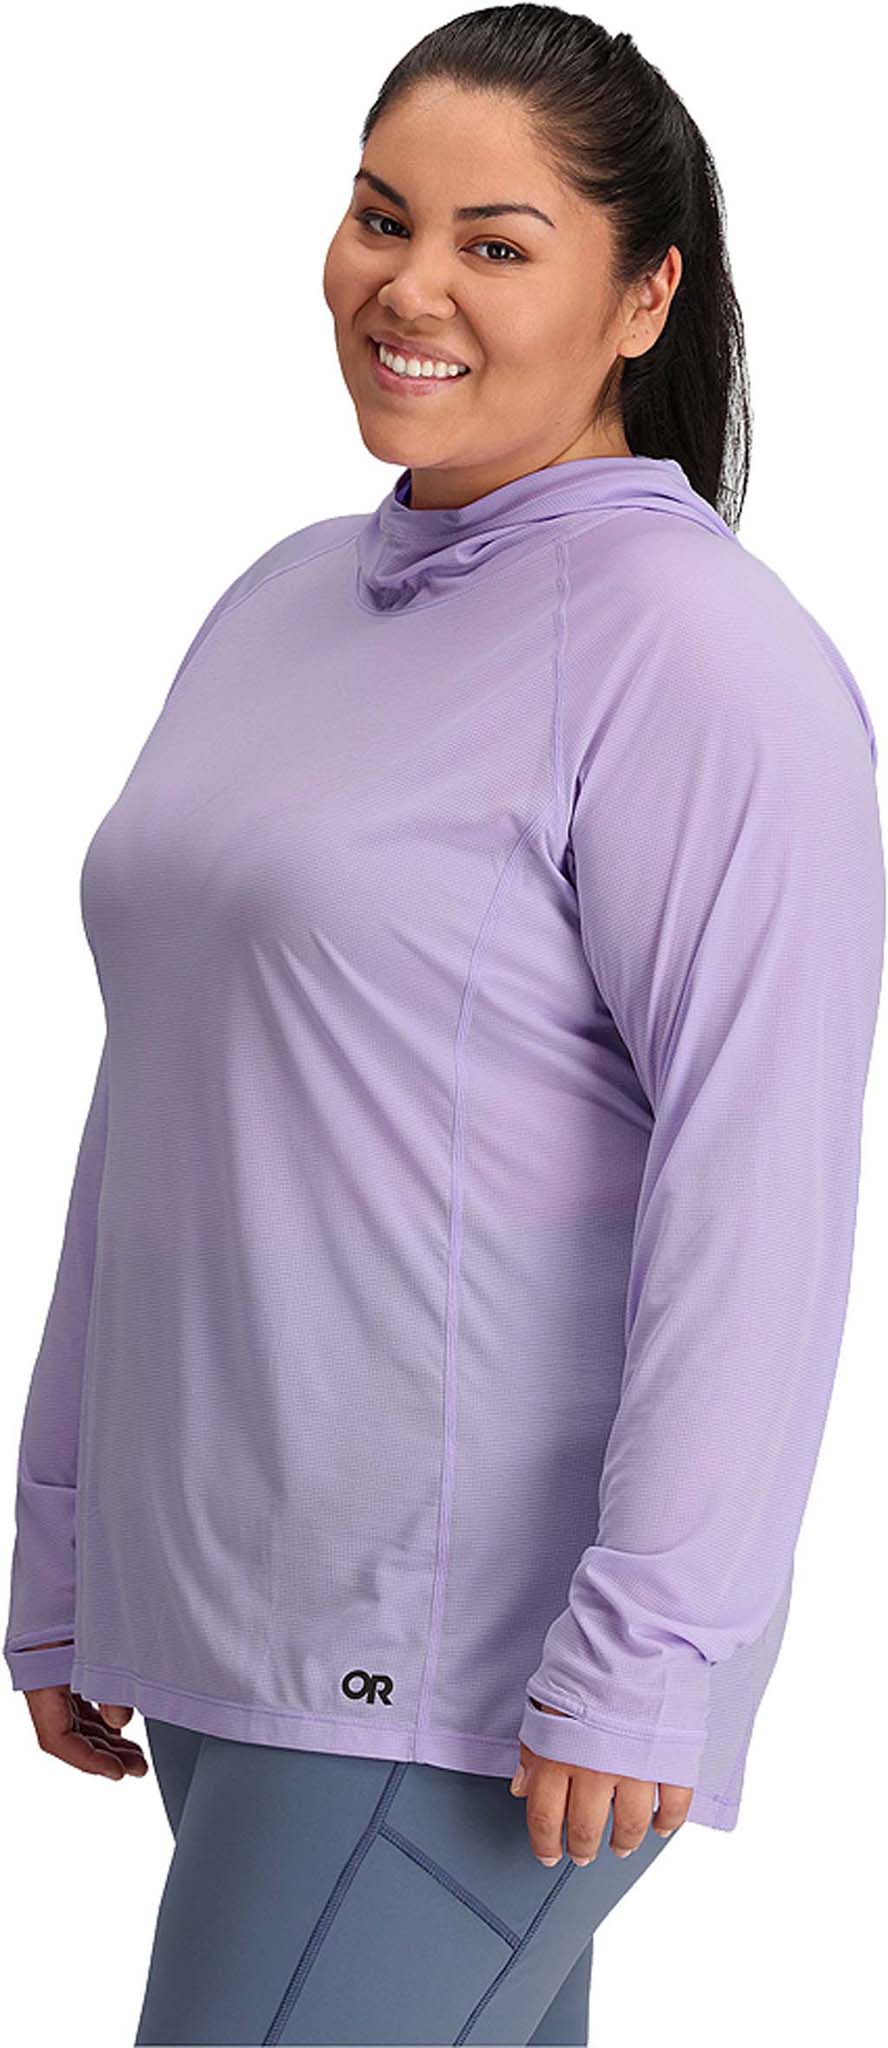 $85 Lole Echo Hoodie Zip Top NWT Size XS Yoga Activewear Vest Pockets